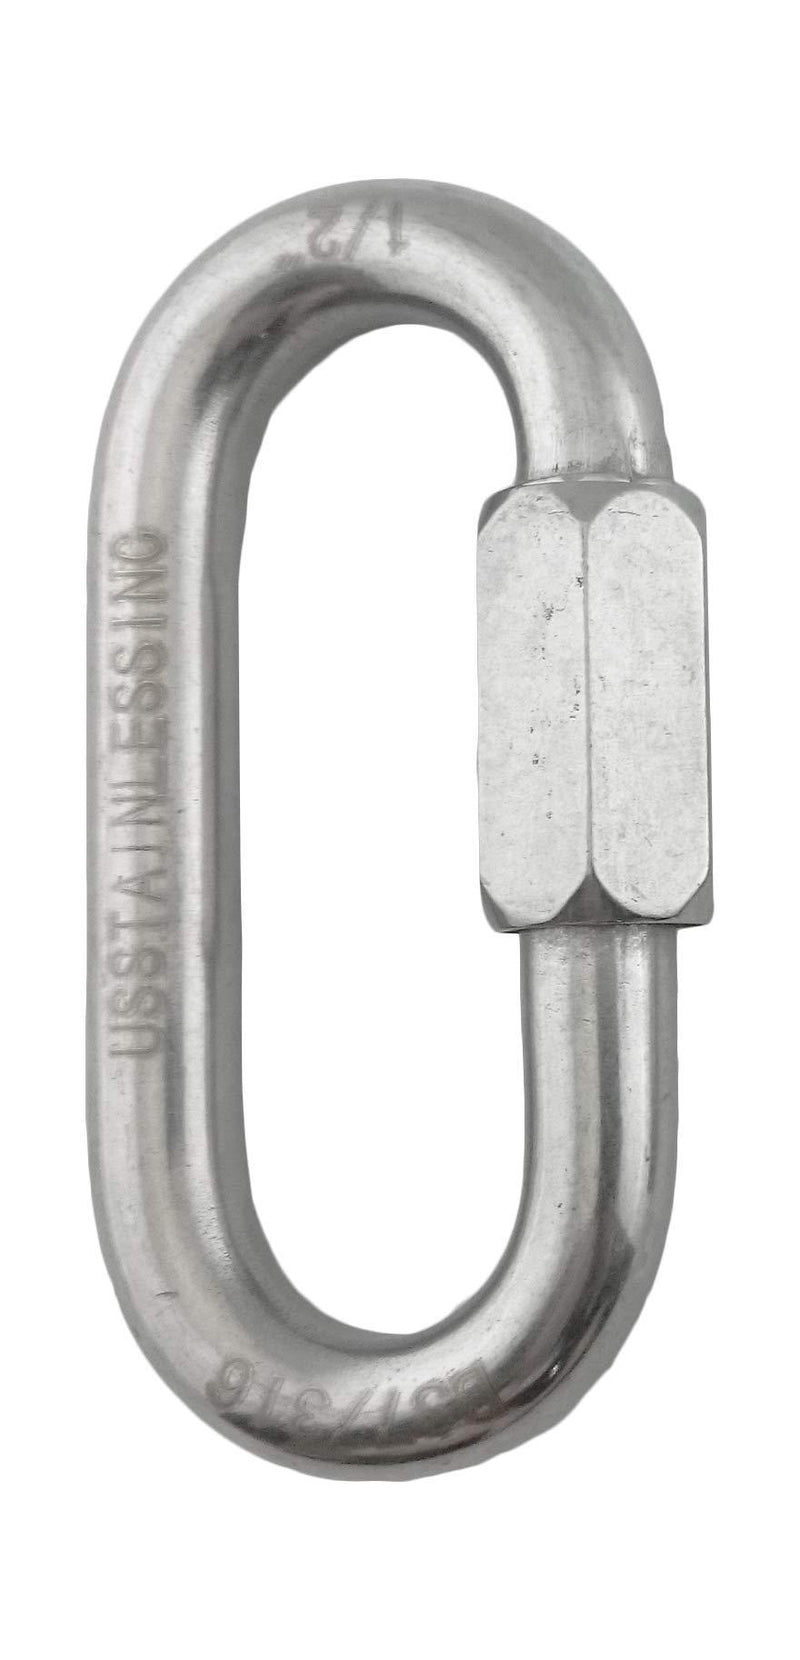  [AUSTRALIA] - Stainless Steel 316 Quick Link 1/2" (12mm) Marine Grade